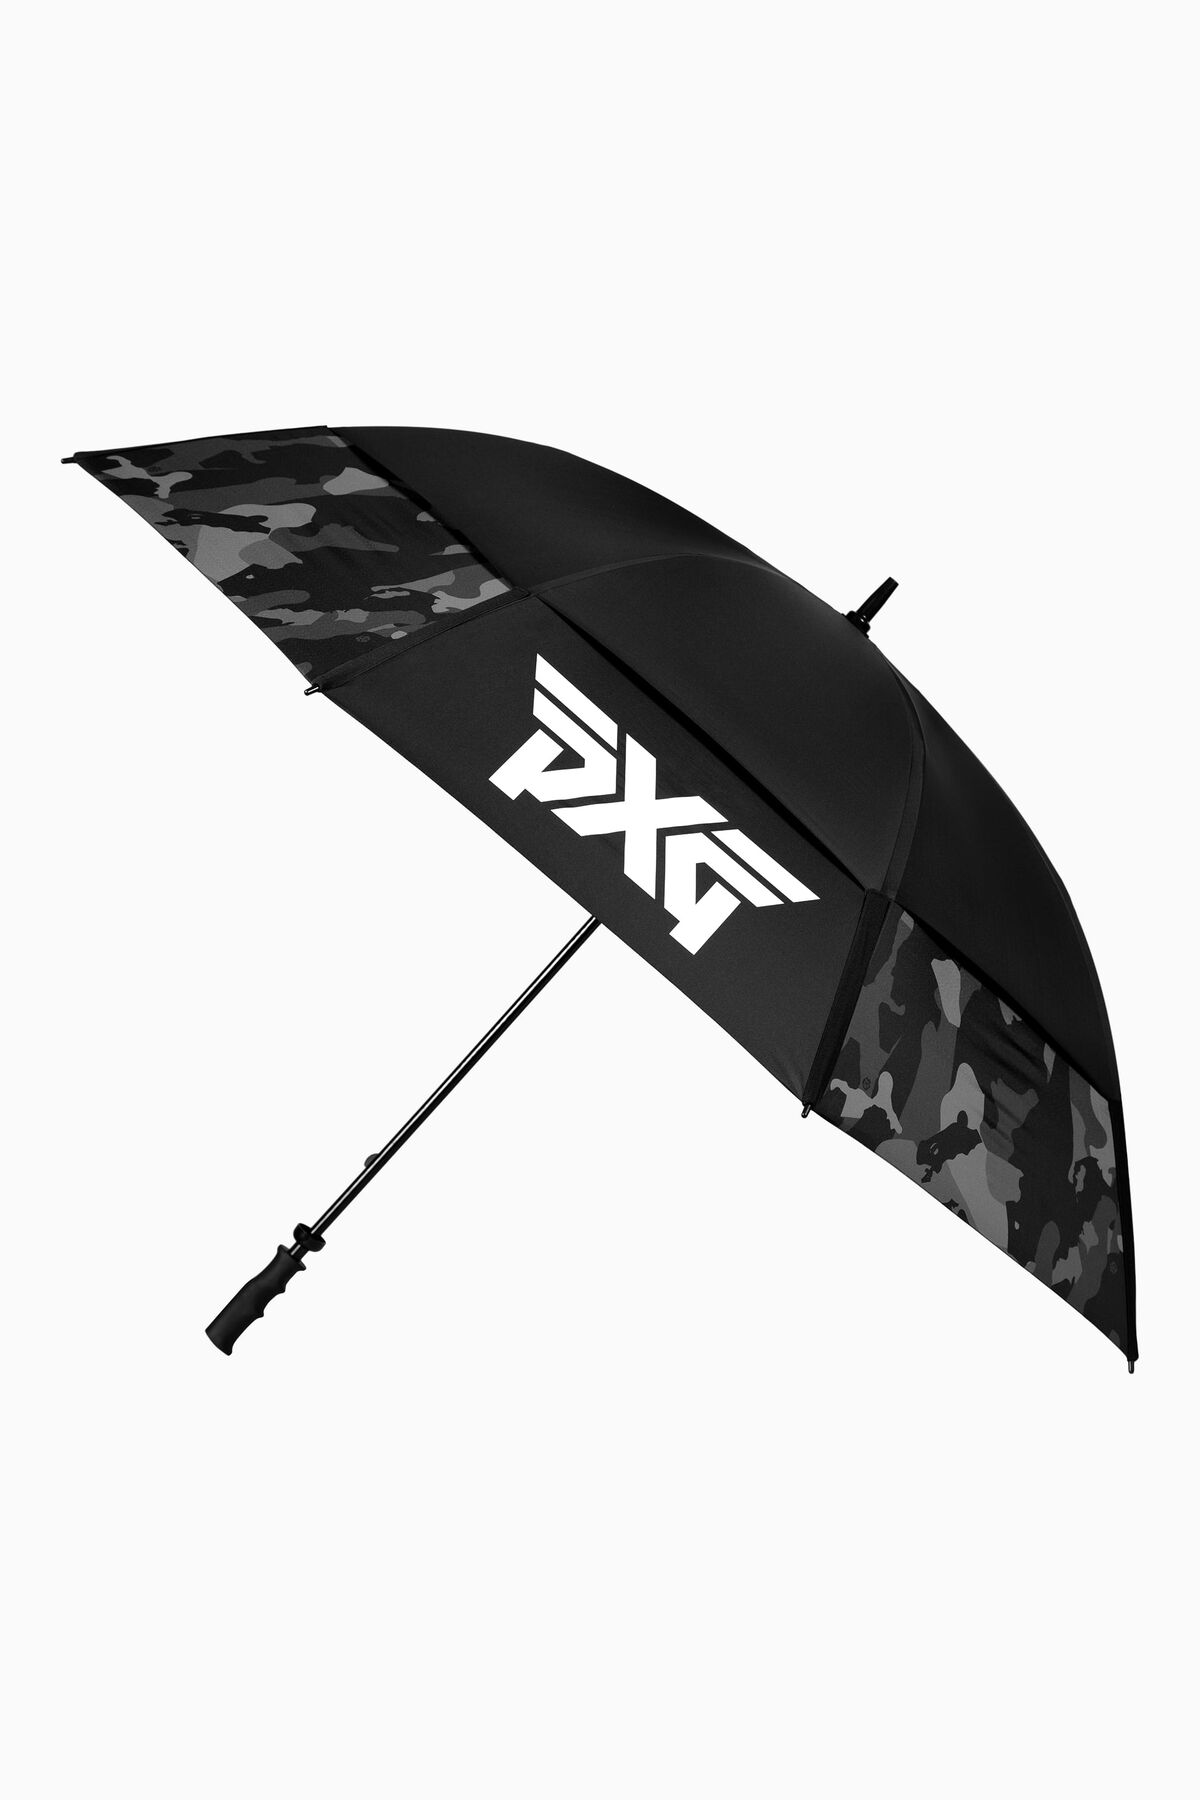 Fairway Camo Dual Canopy Umbrella Black Camo